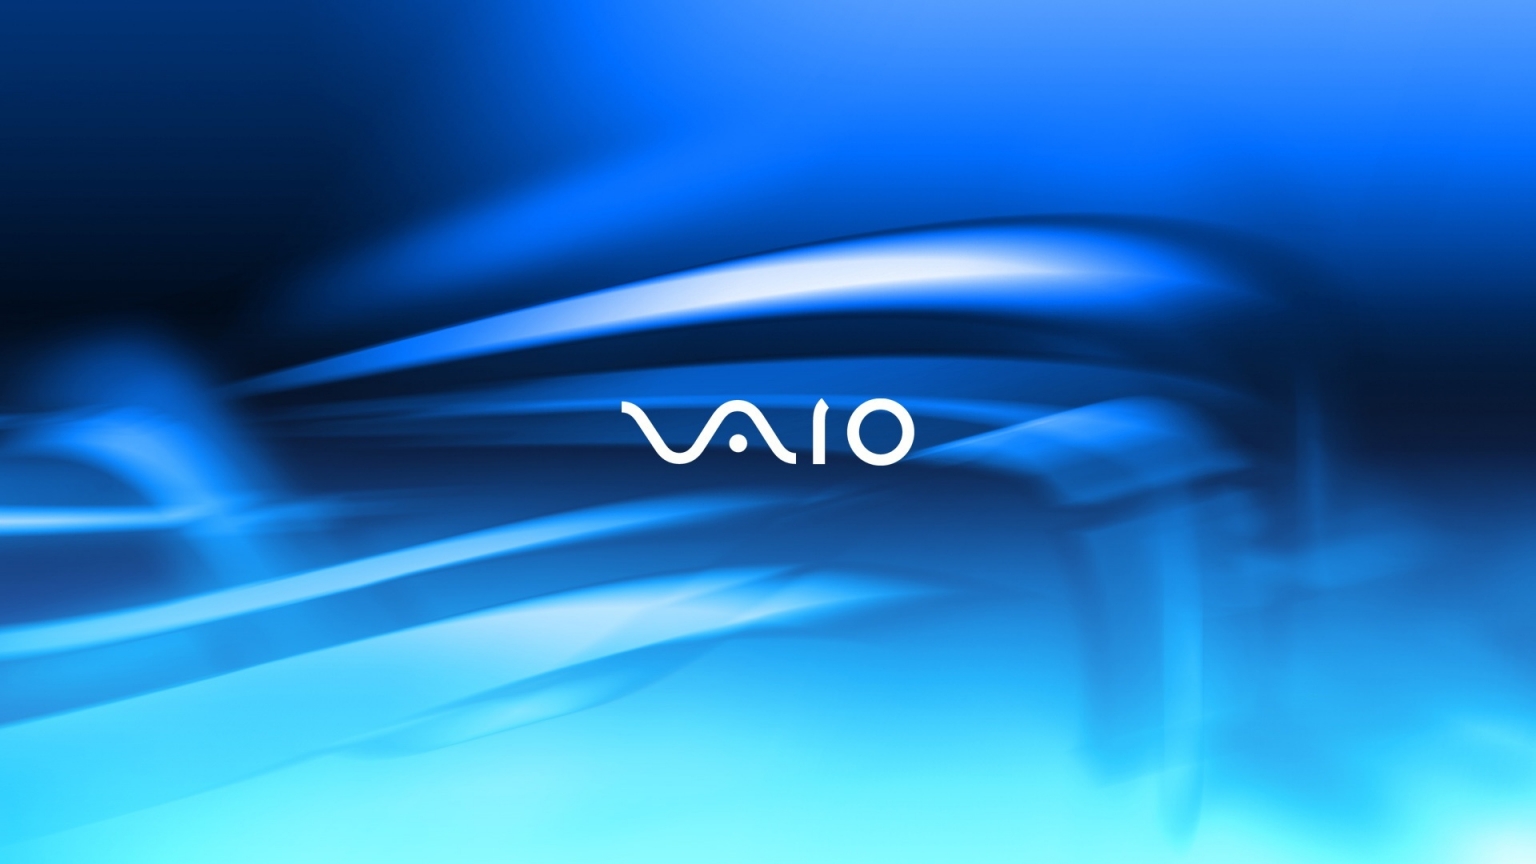 Vaio light blue for 1536 x 864 HDTV resolution